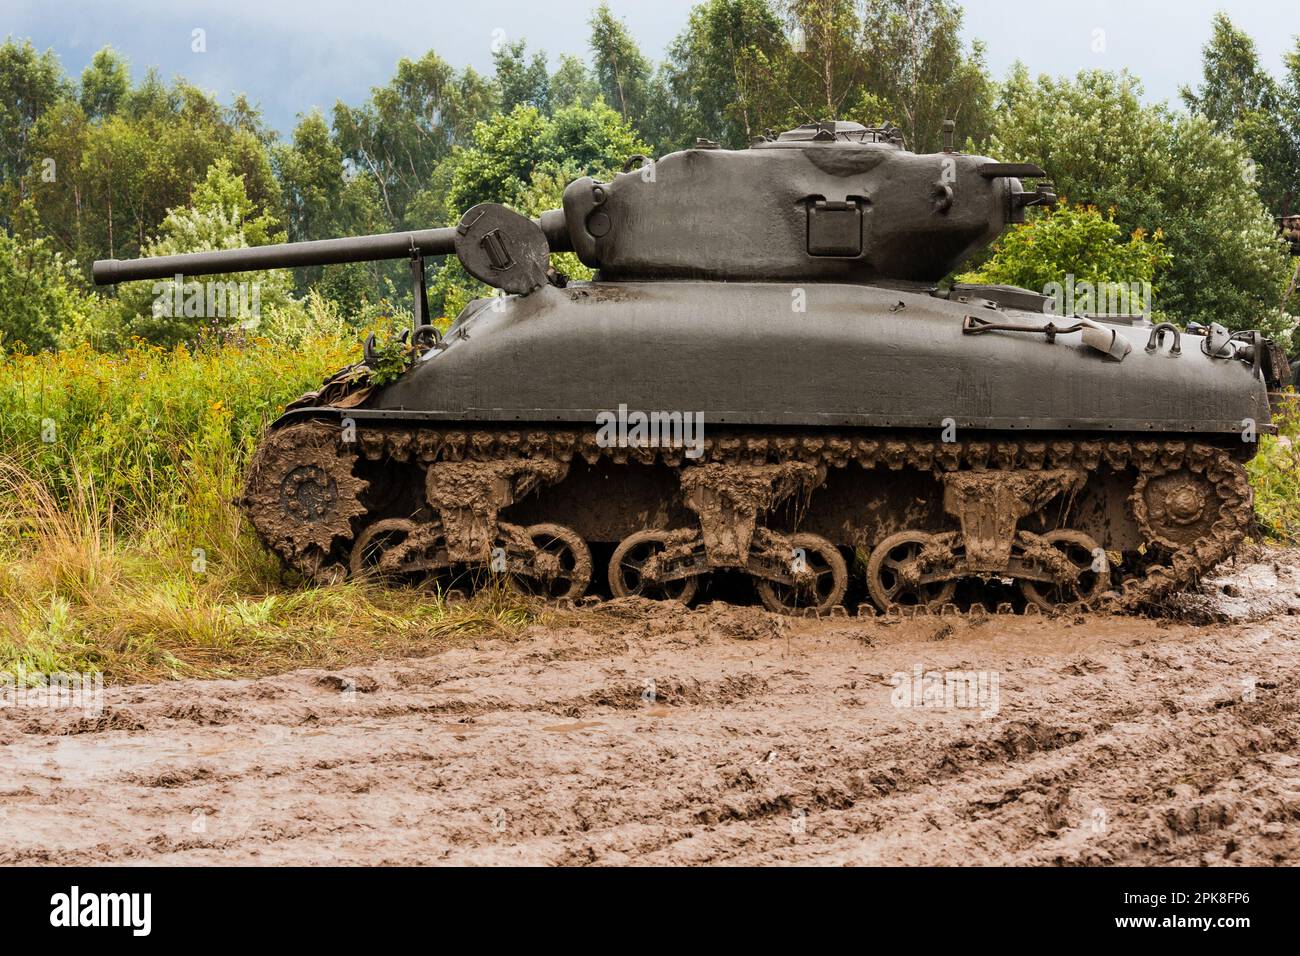 An American World War II Sherman M41A1 76 (w) tank stands in a field in the mud. Bielsko-Biała, Poland Stock Photo